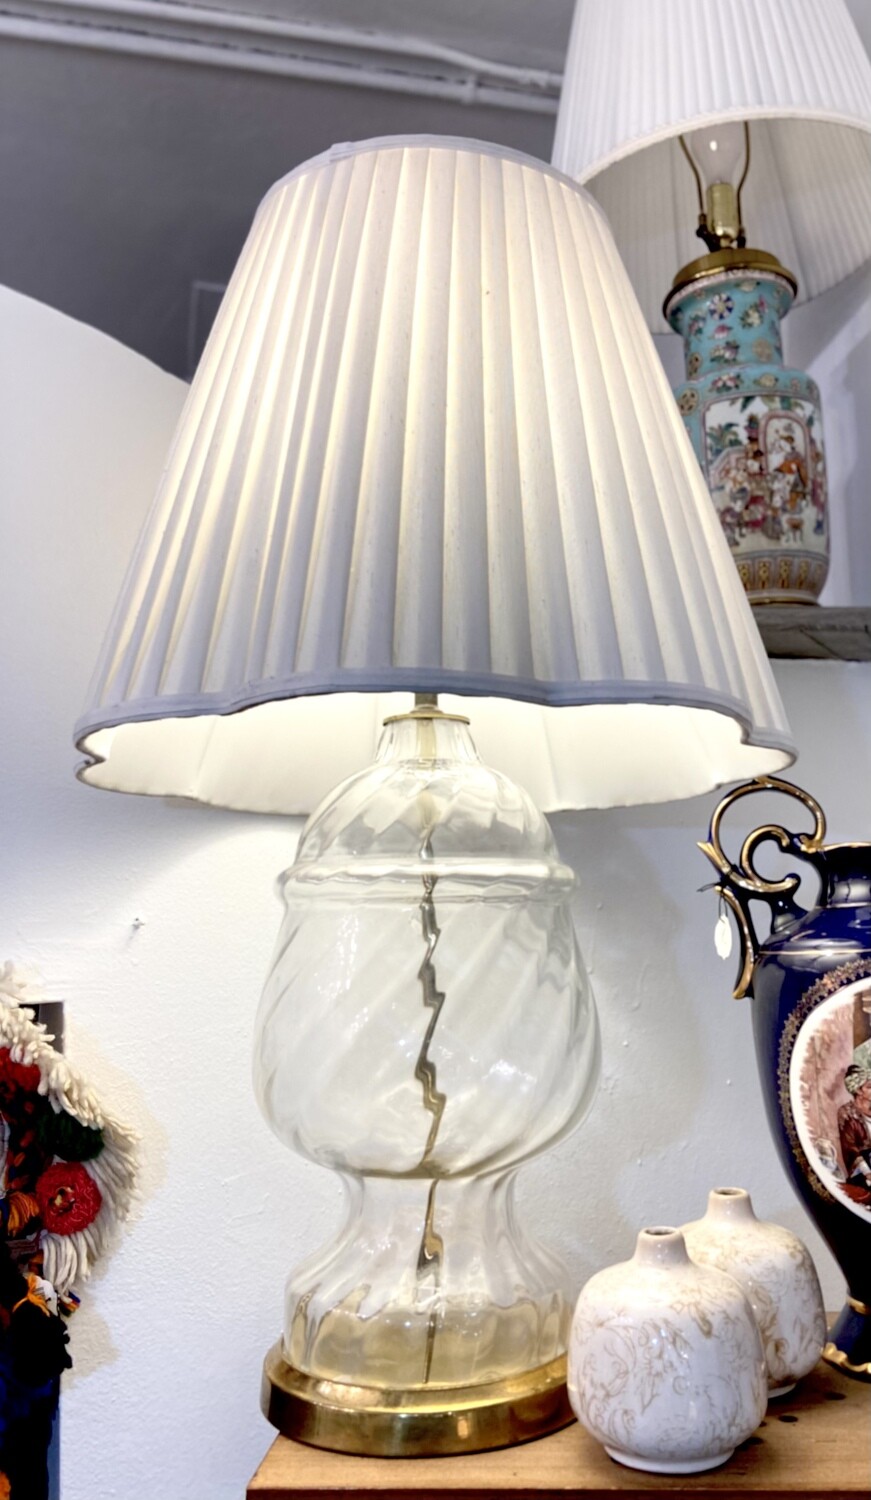 Glass Ridged Swirl Lamp